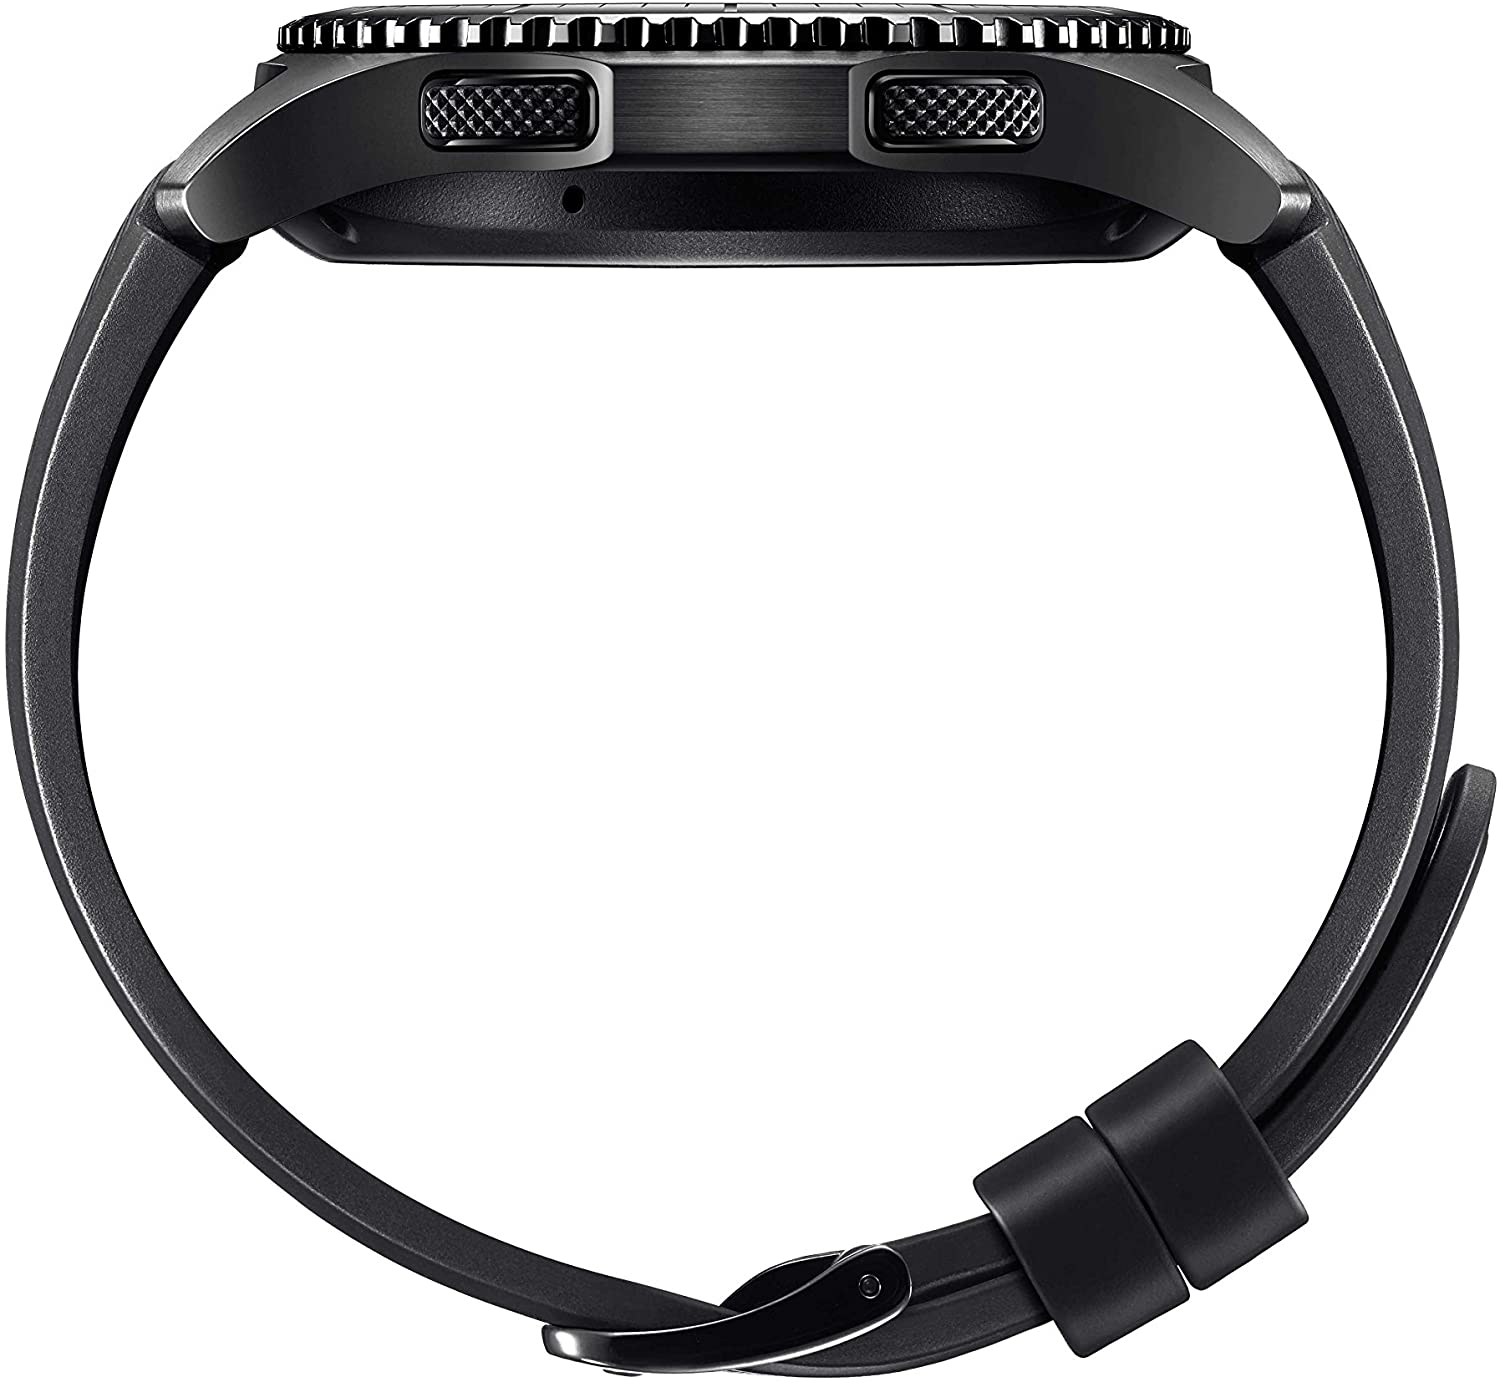 Samsung Gear S3 Frontier Smartwatch 1.3